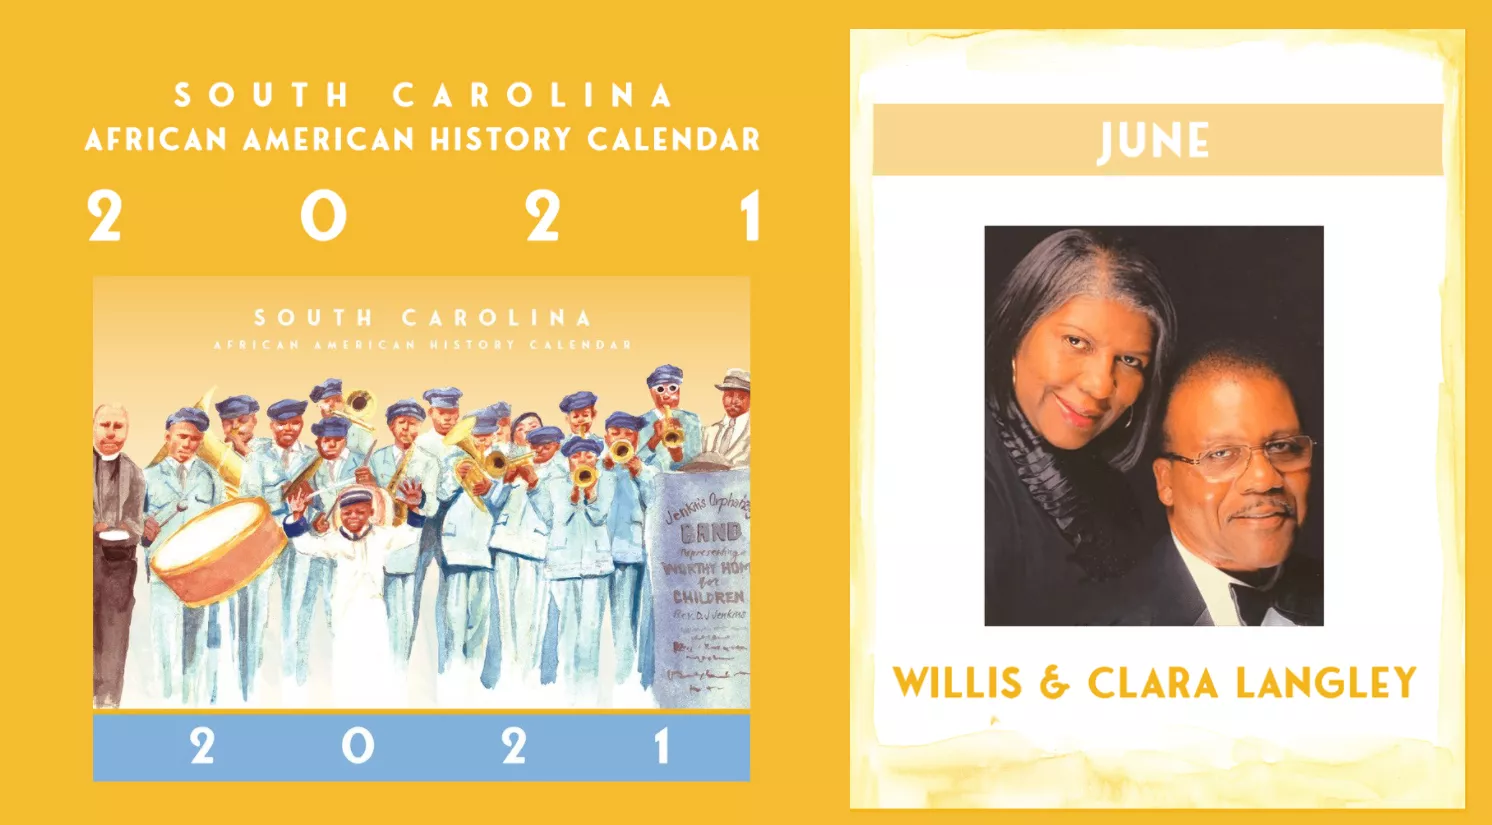 SC African American History Calendar: June Honorees - Willis and Clara Langley